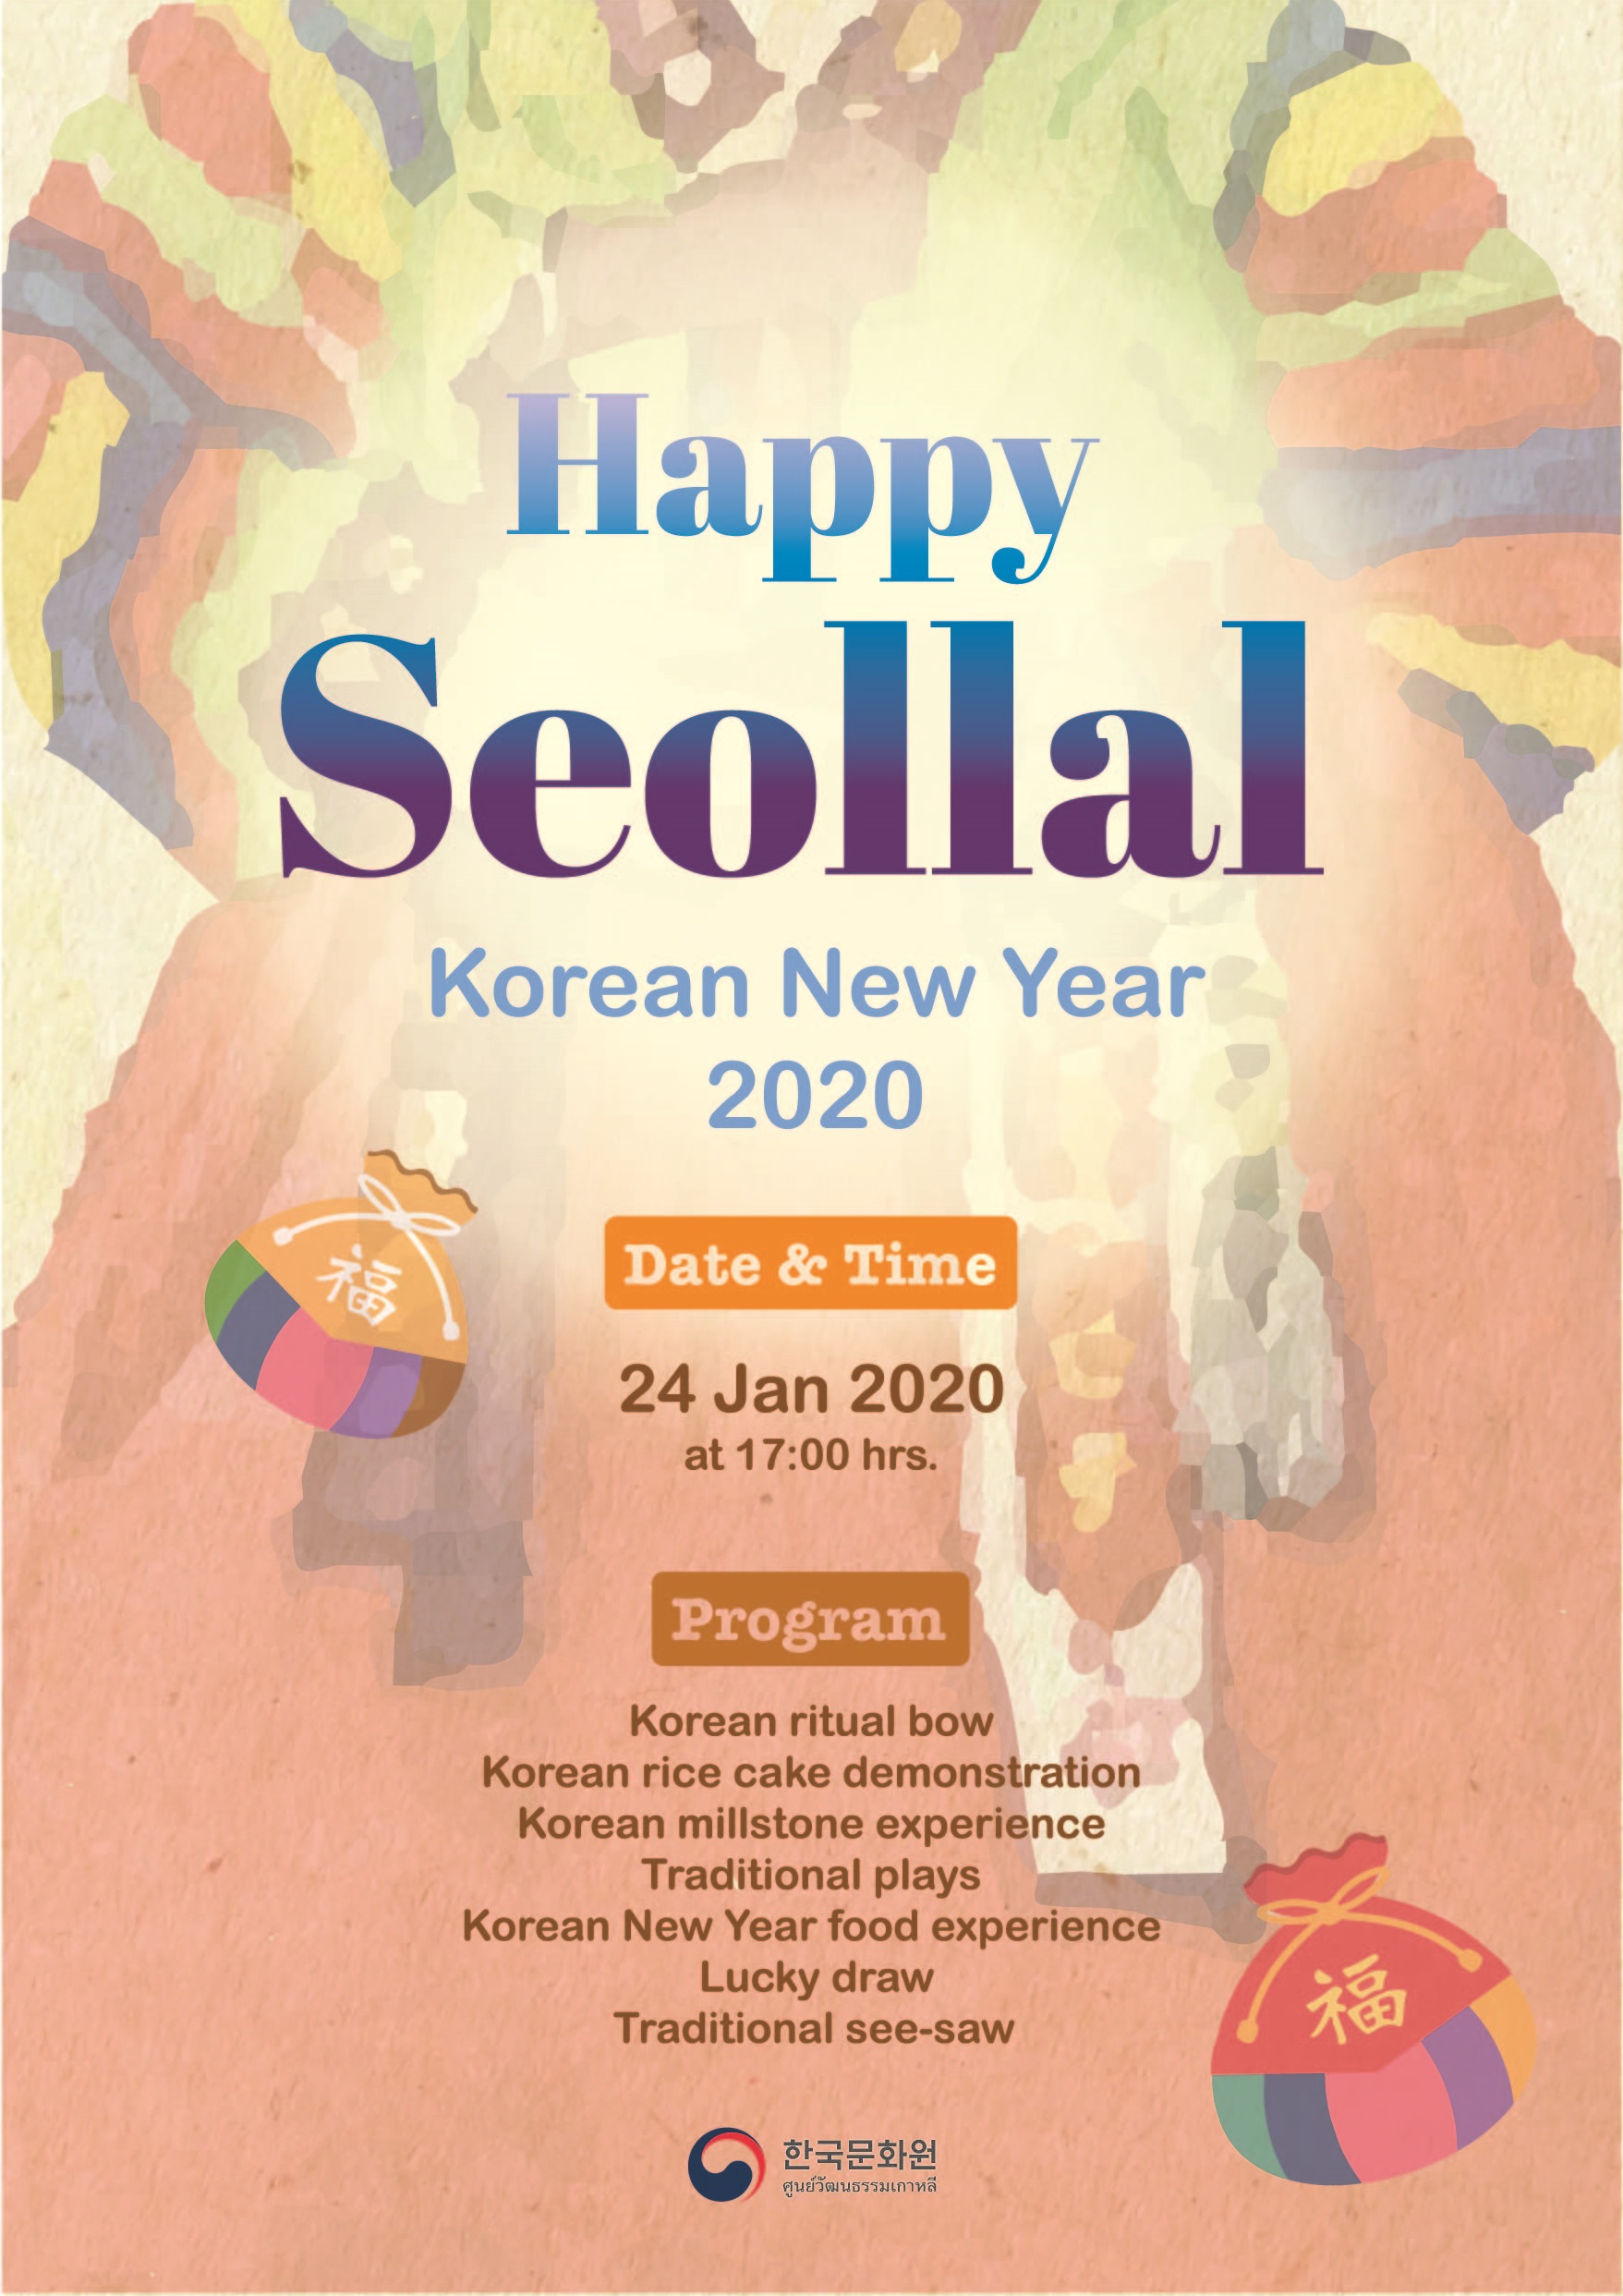 Happy Seollal Korean New Year Korea Net The Official Website Of The Republic Of Korea